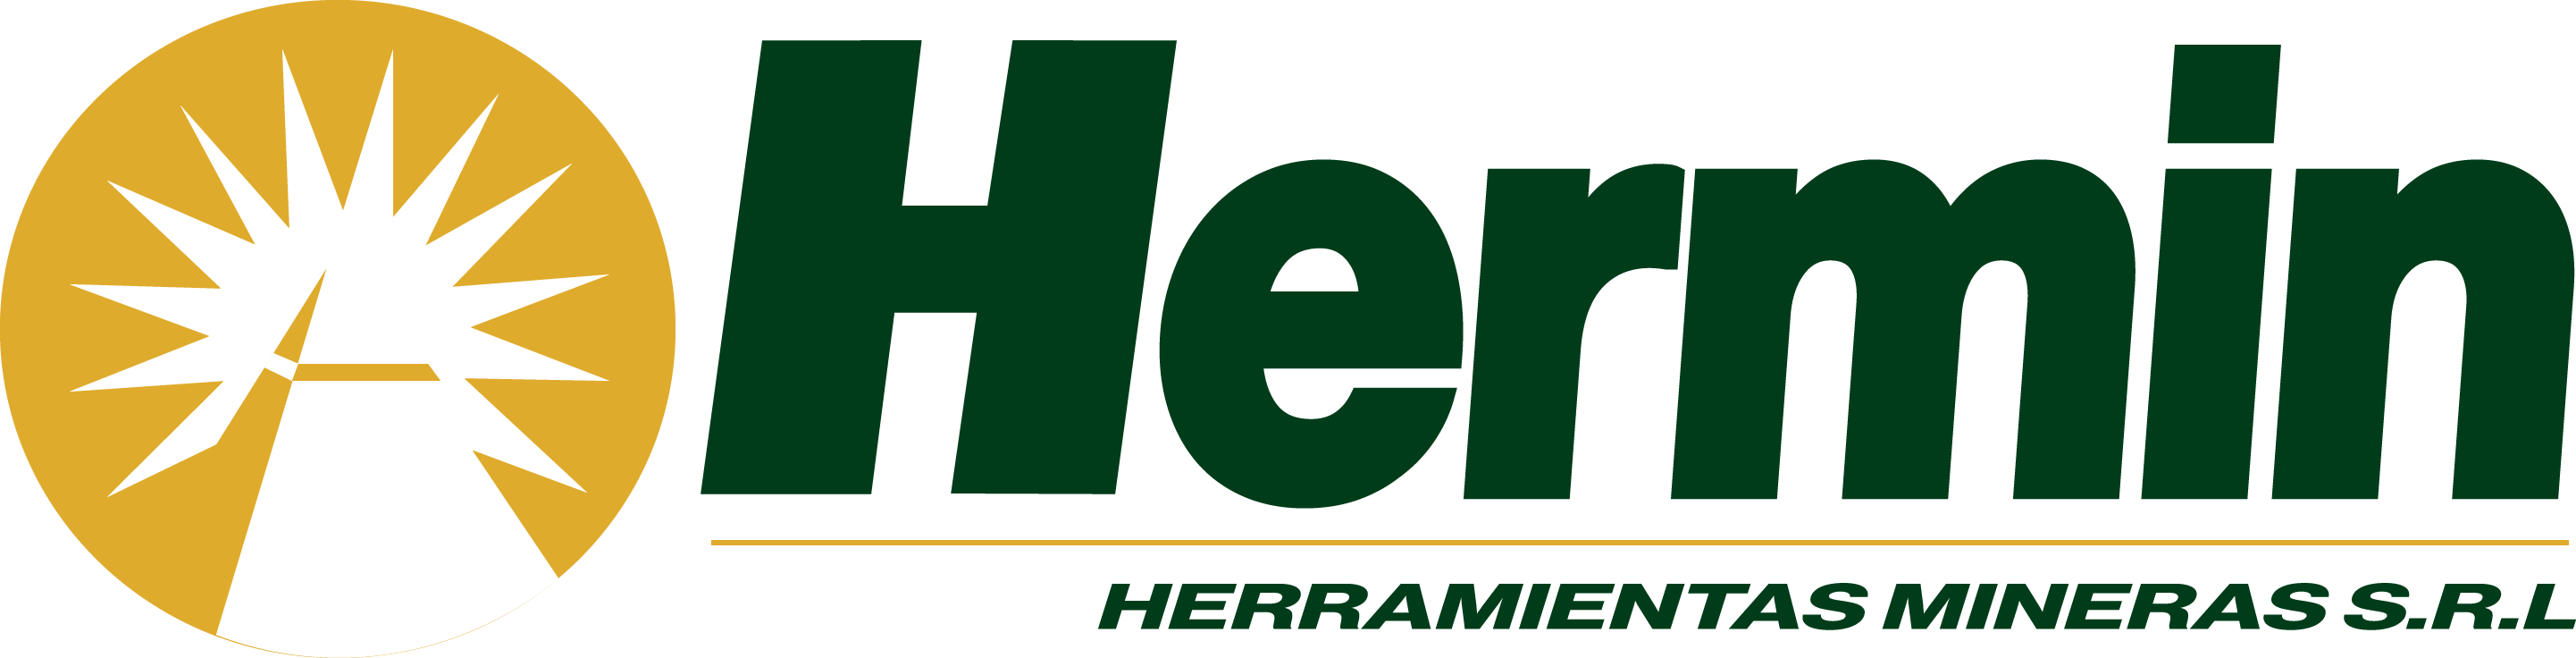 HERMIN logo